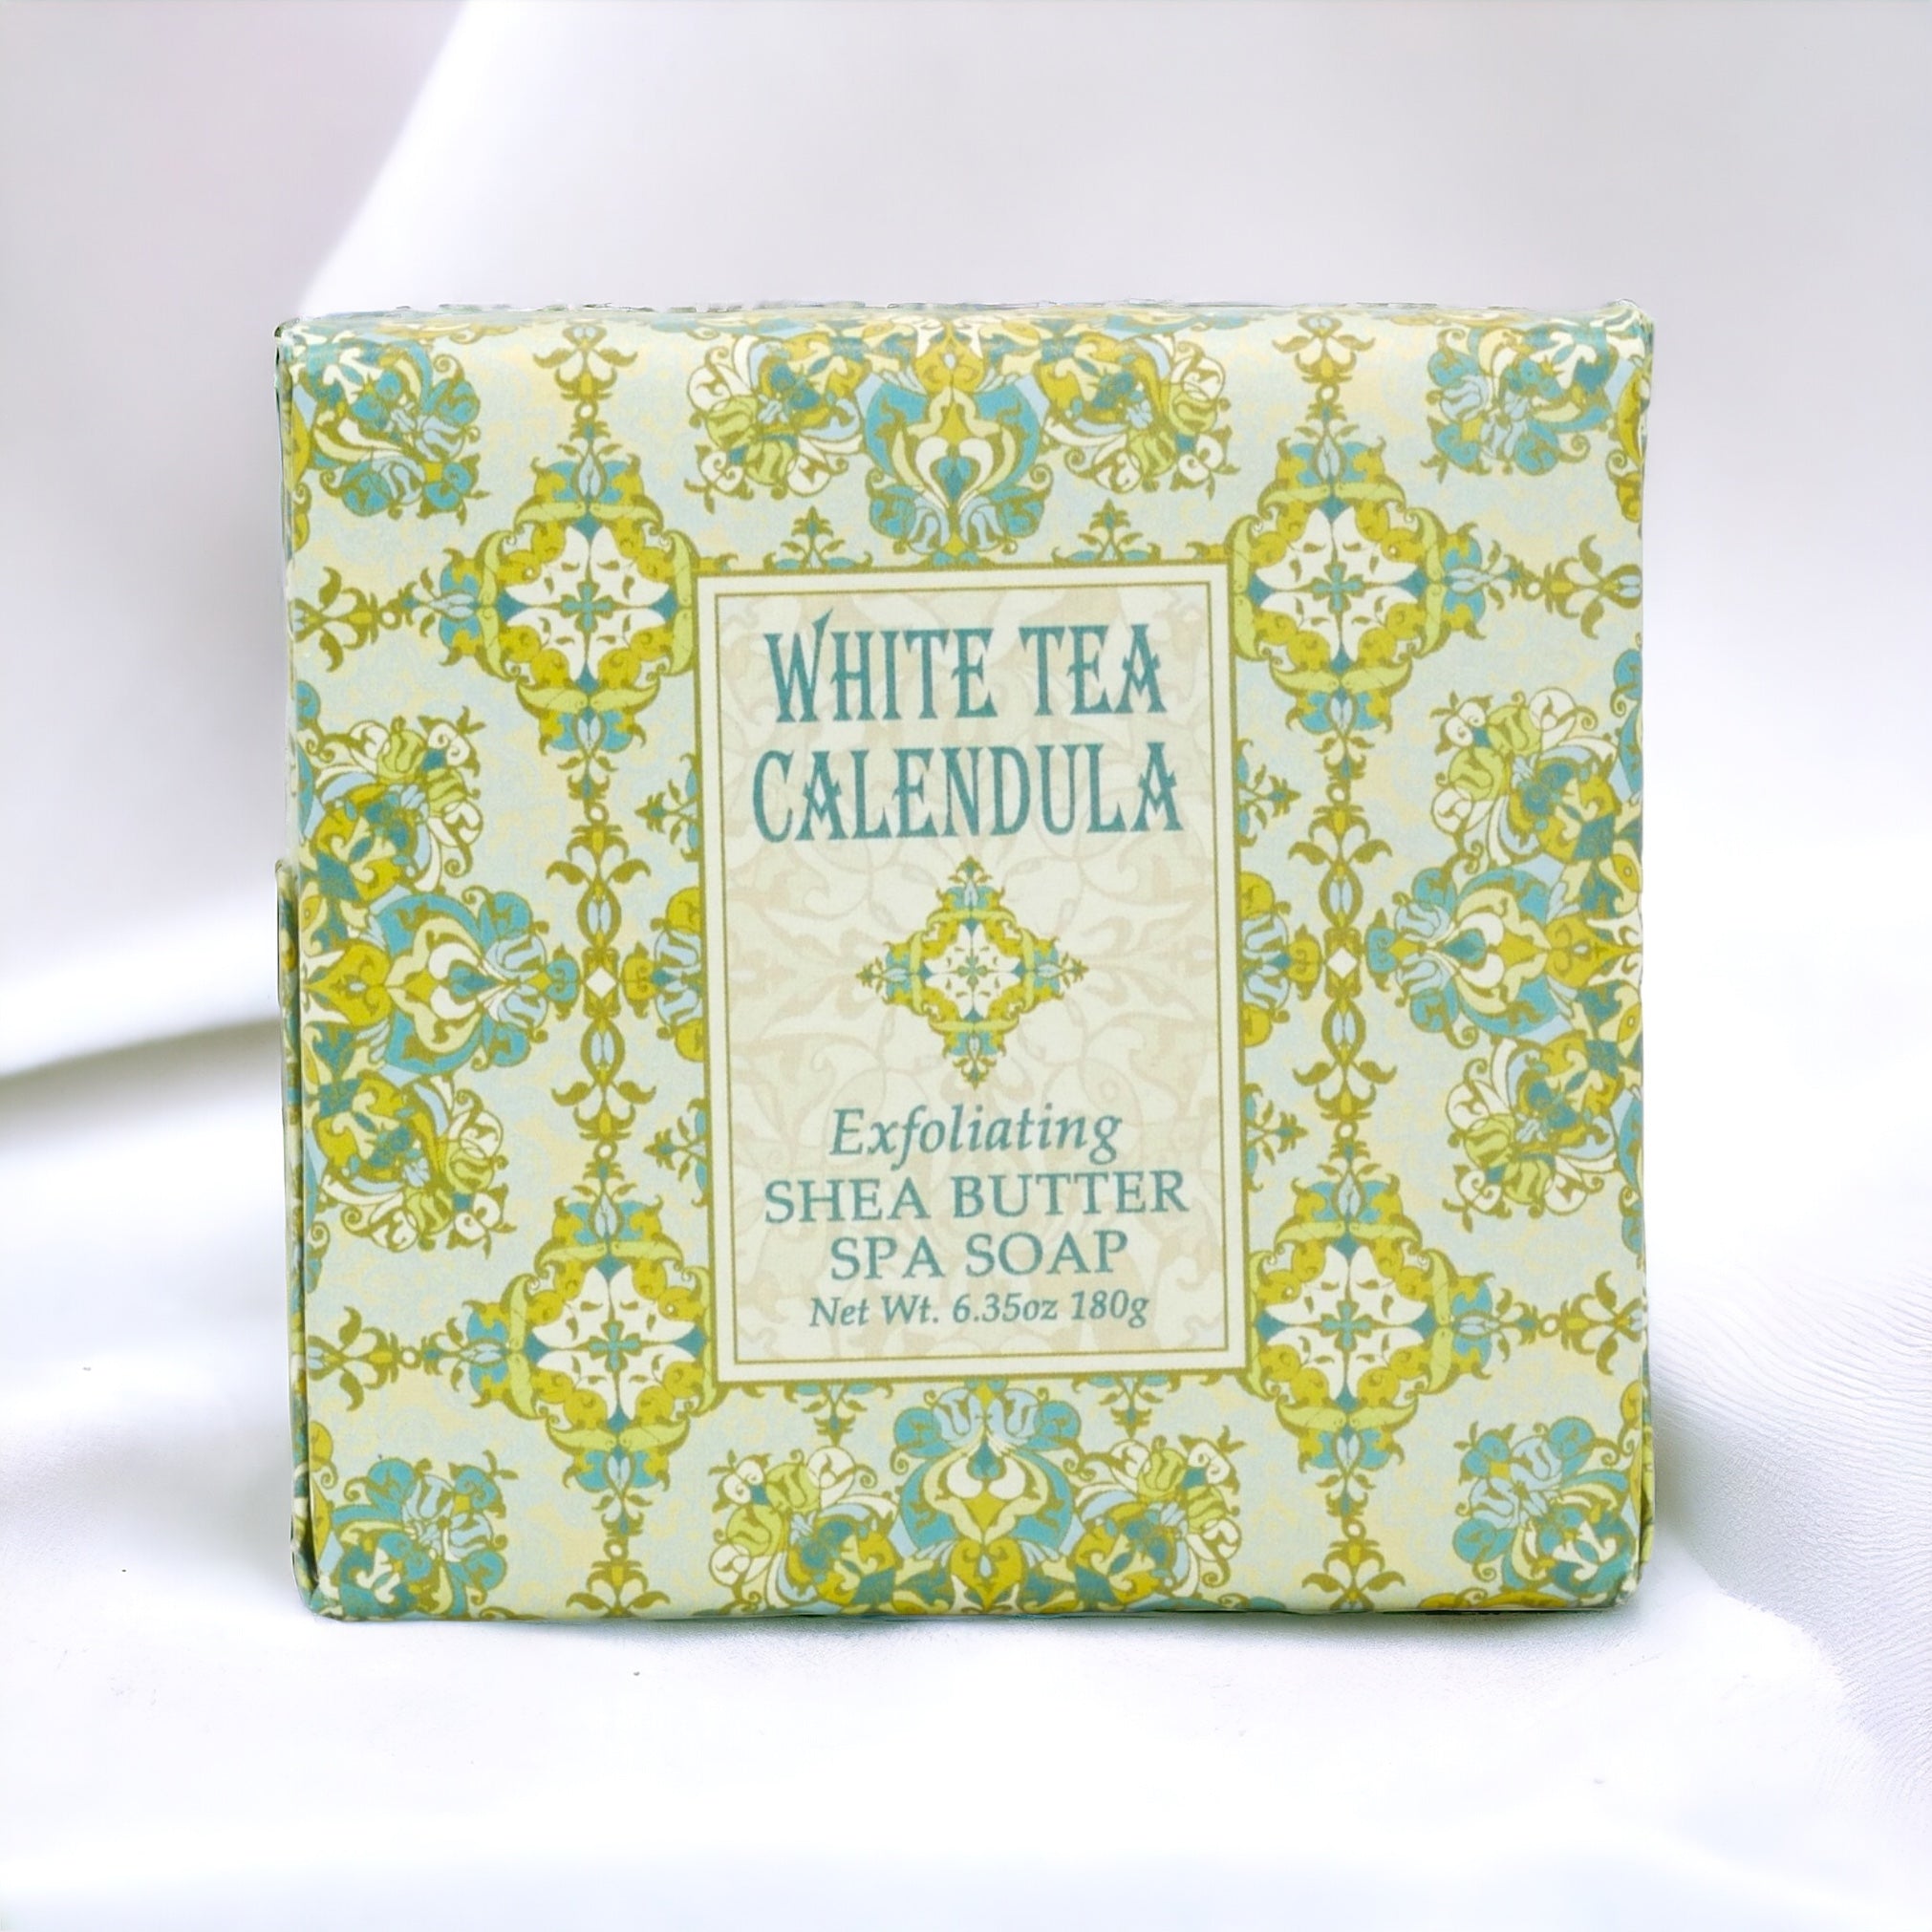 White Tea Calendula Exfoliating Shea Butter Spa Soap by Greenwich Bay Trading Co.